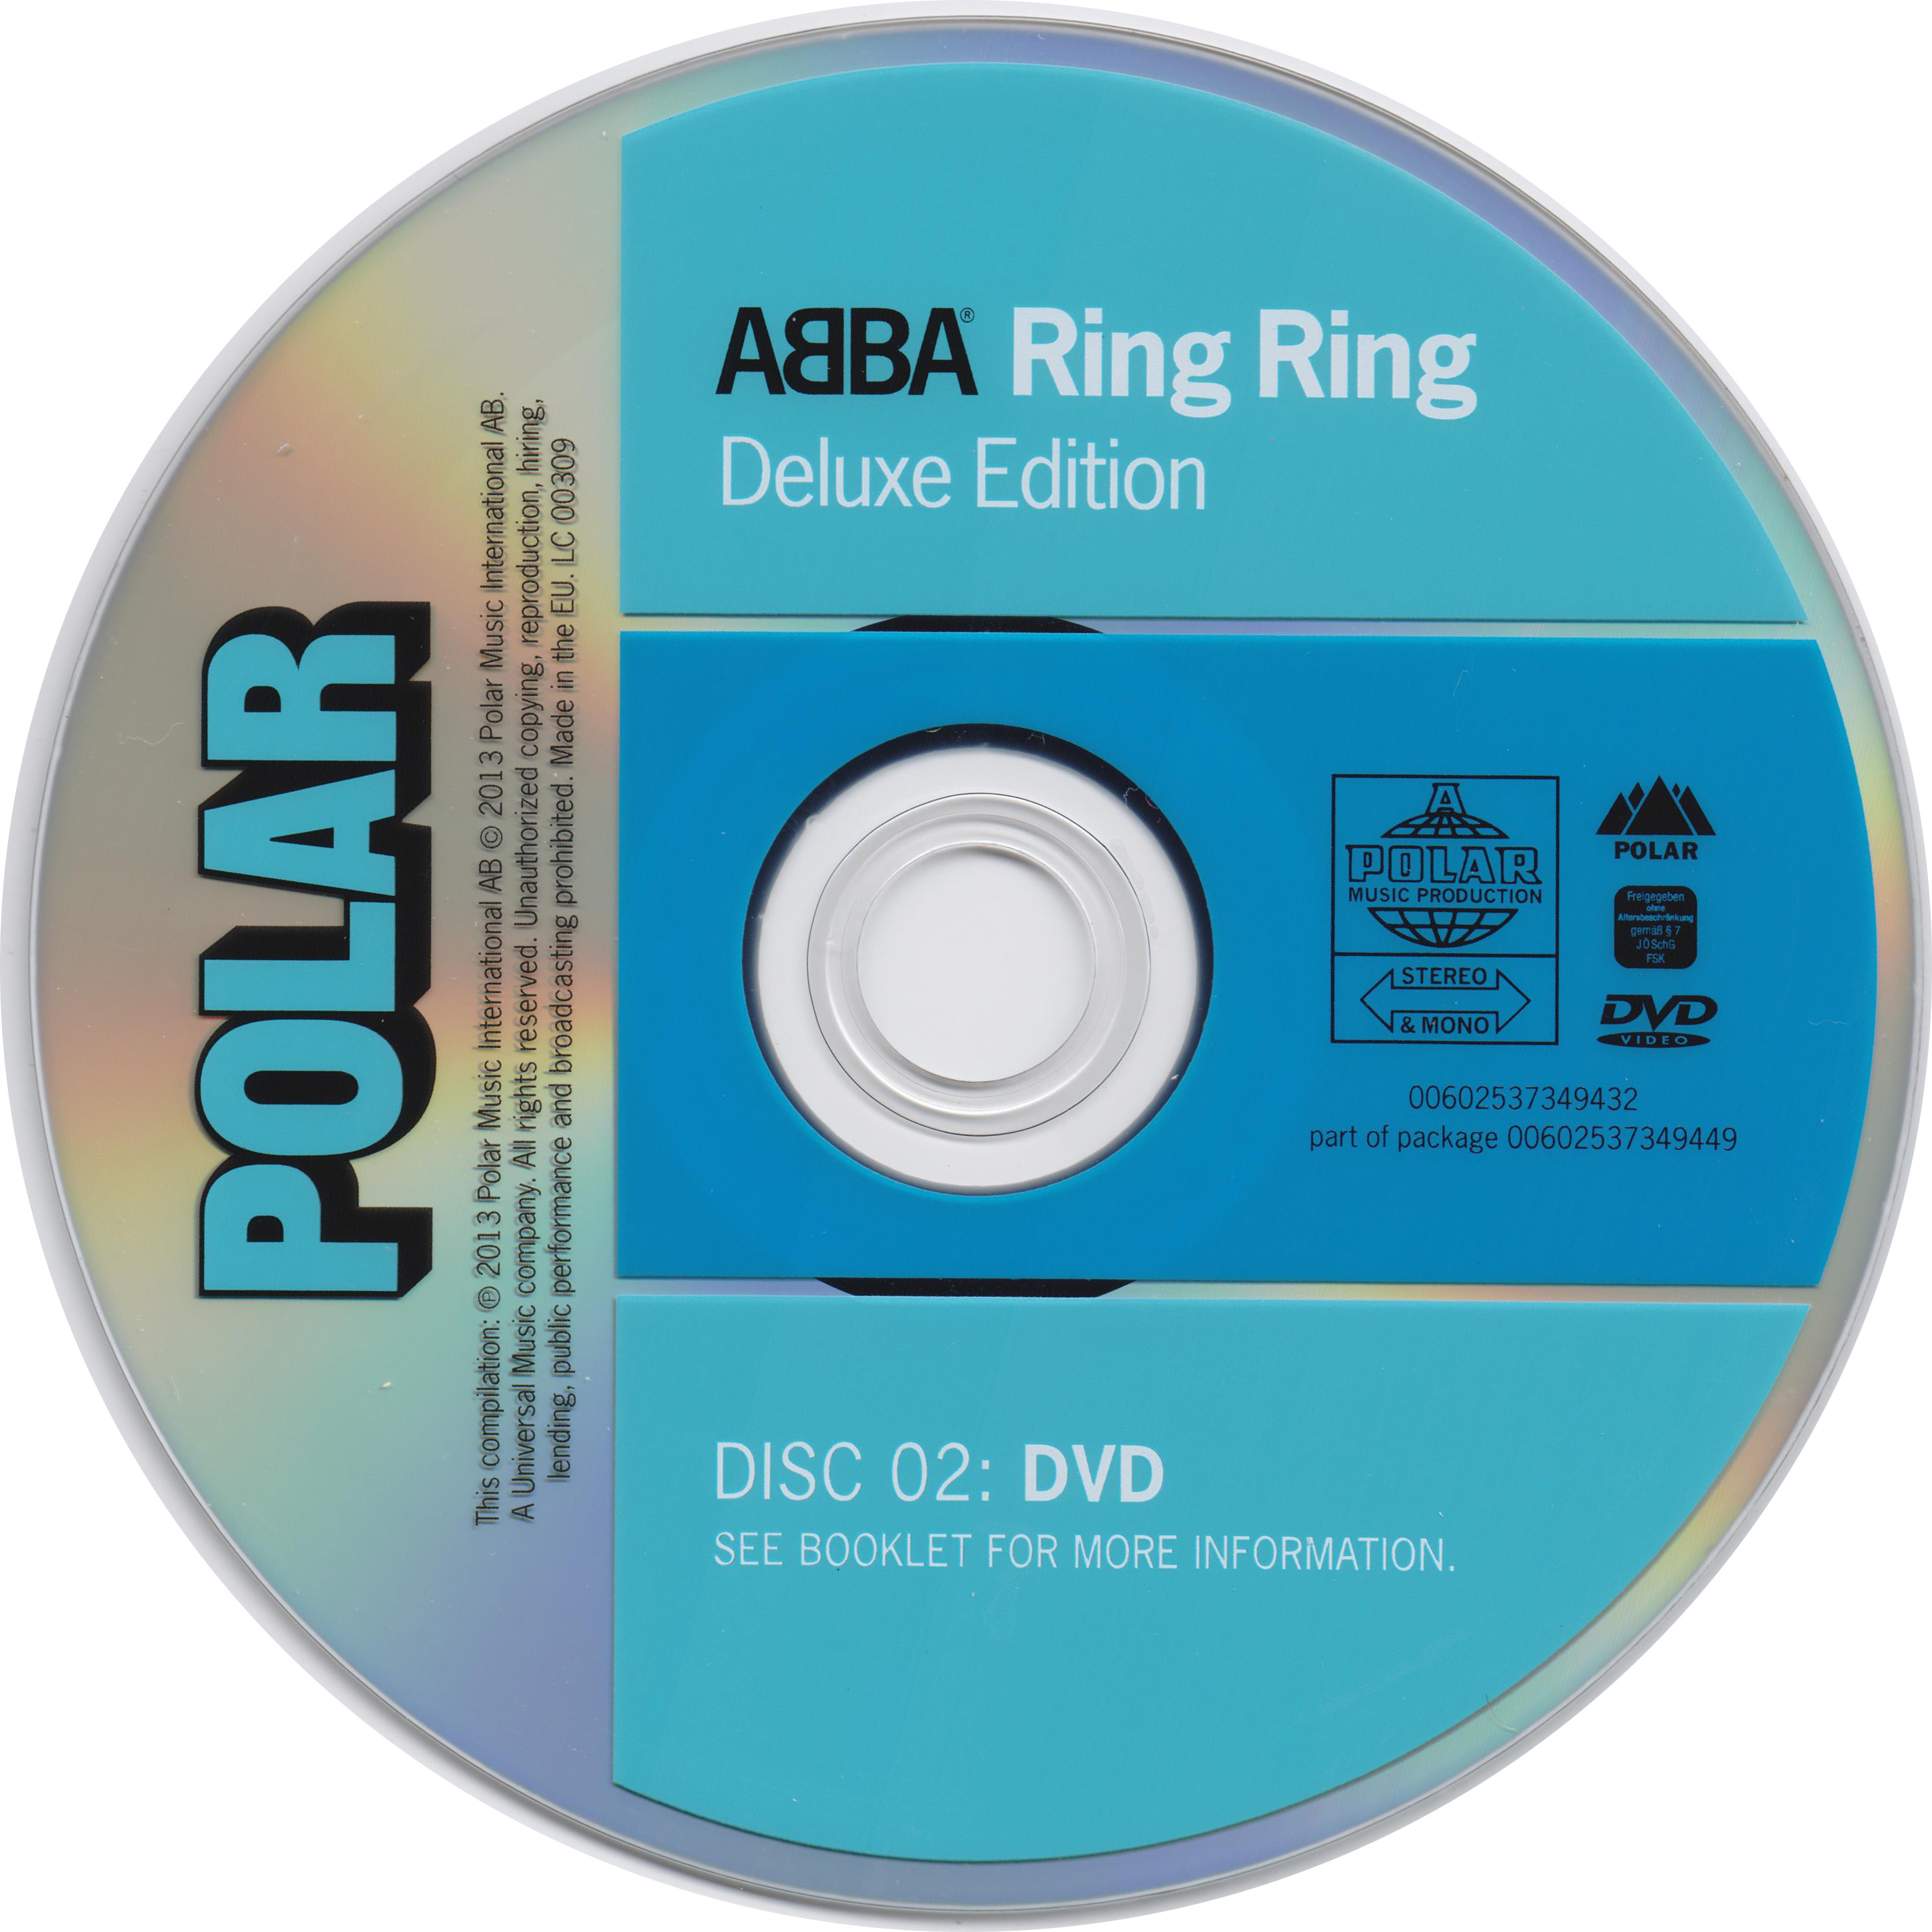 Een centrale tool die een belangrijke rol speelt Spruit Elementair COVERS.BOX.SK ::: abba - ring ring [deluxe edition] (2013) - high quality  DVD / Blueray / Movie